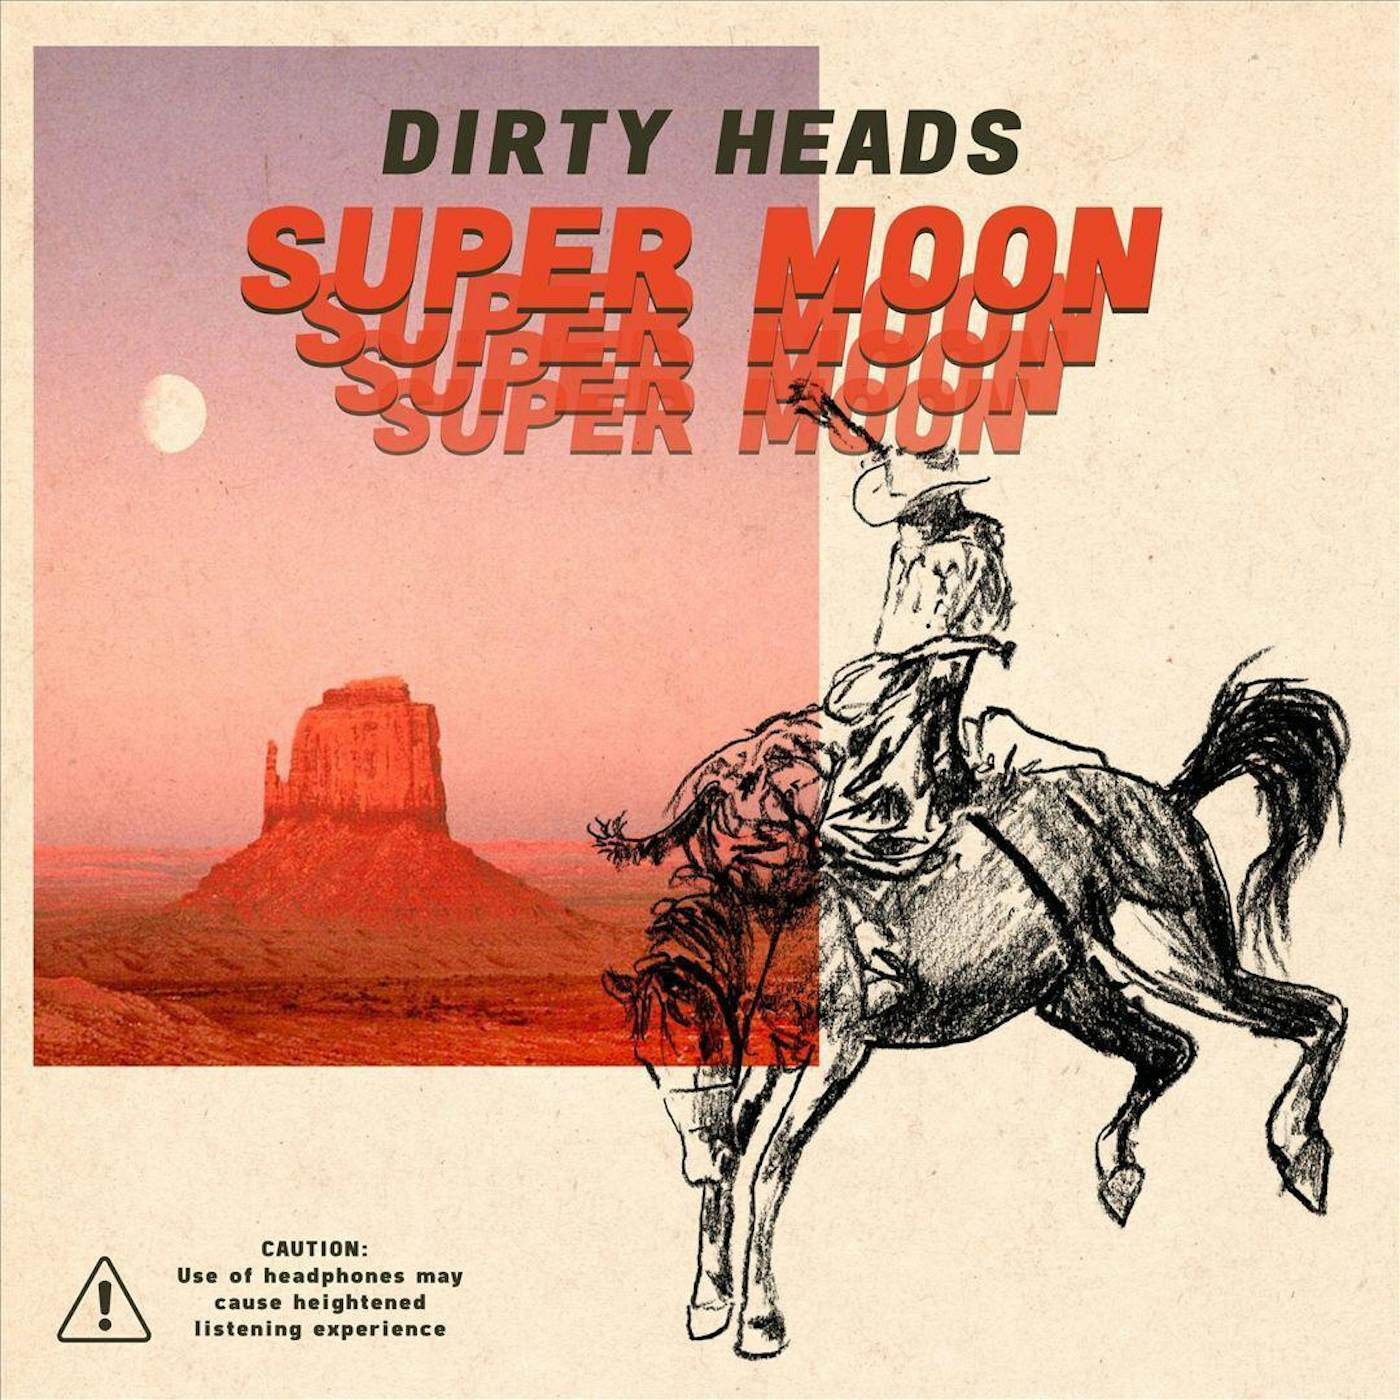 Dirty Heads Super Moon Vinyl Record